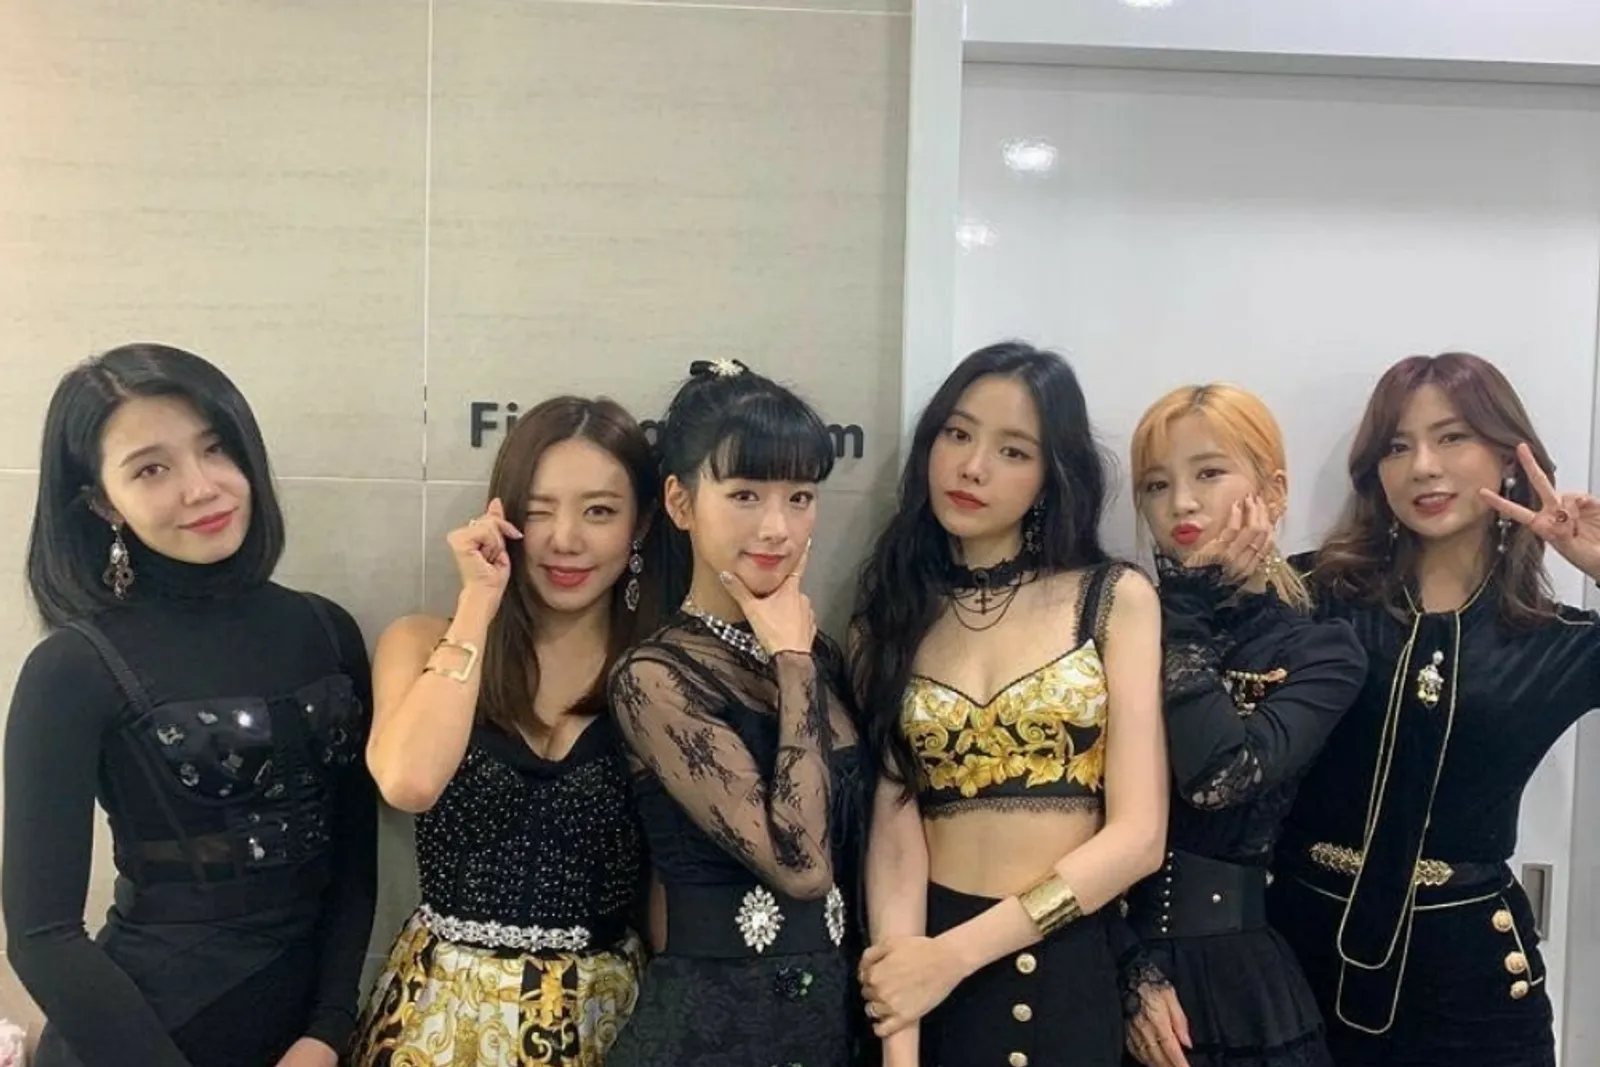 Line Up Super K-Pop Festival Indonesia 2019 dan Detail Harga 